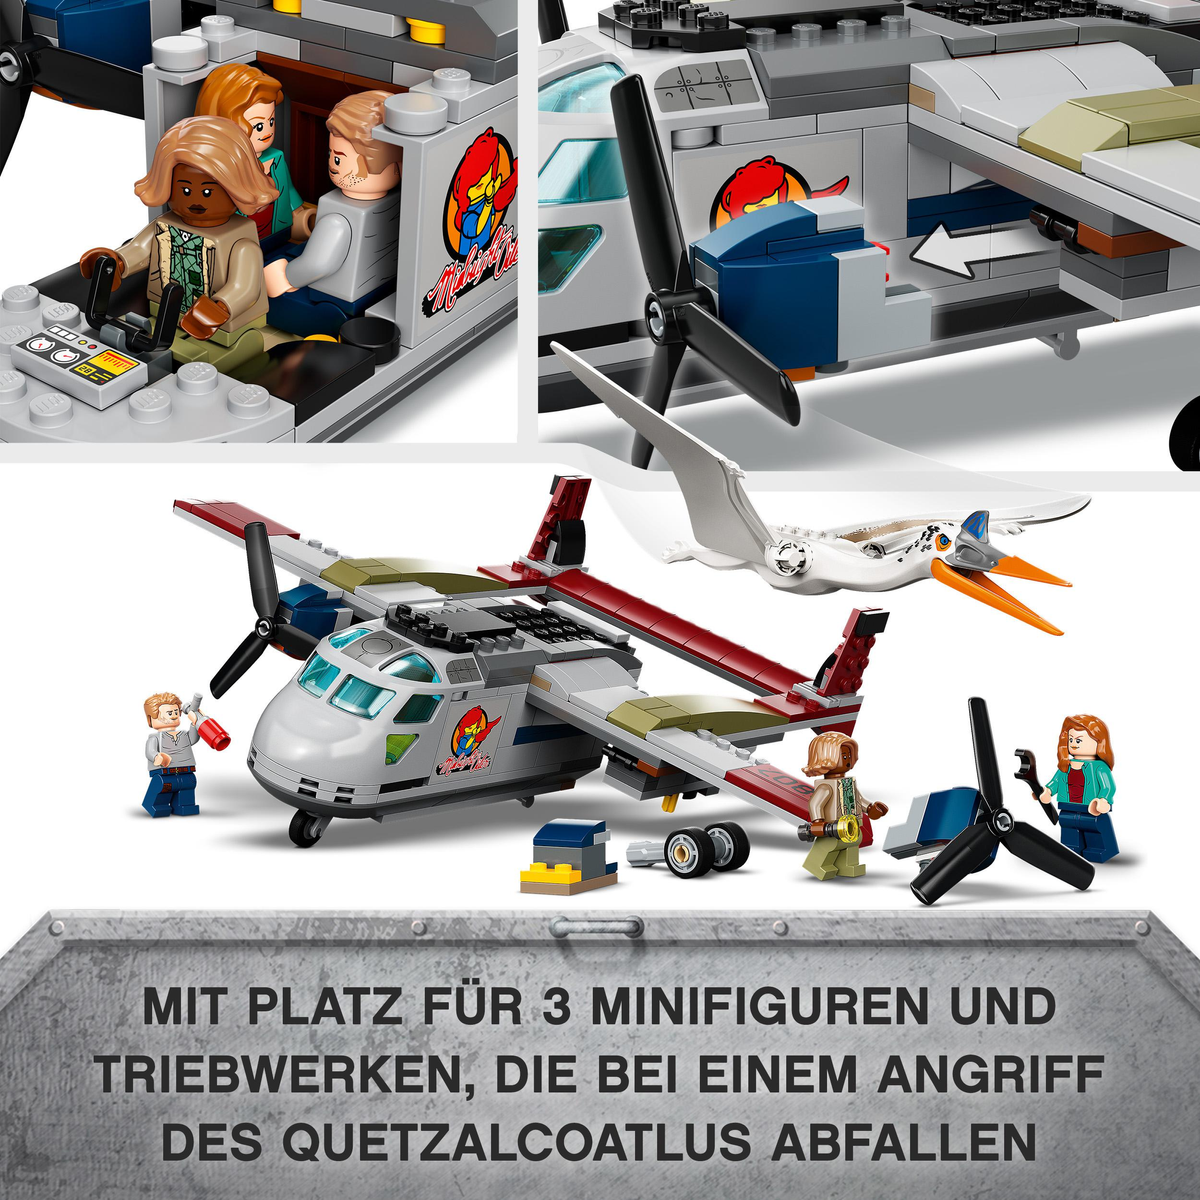 LEGO 76947 Bausatz QUETZALCOATLUS: FLUGZEUG-ÜBERFALL